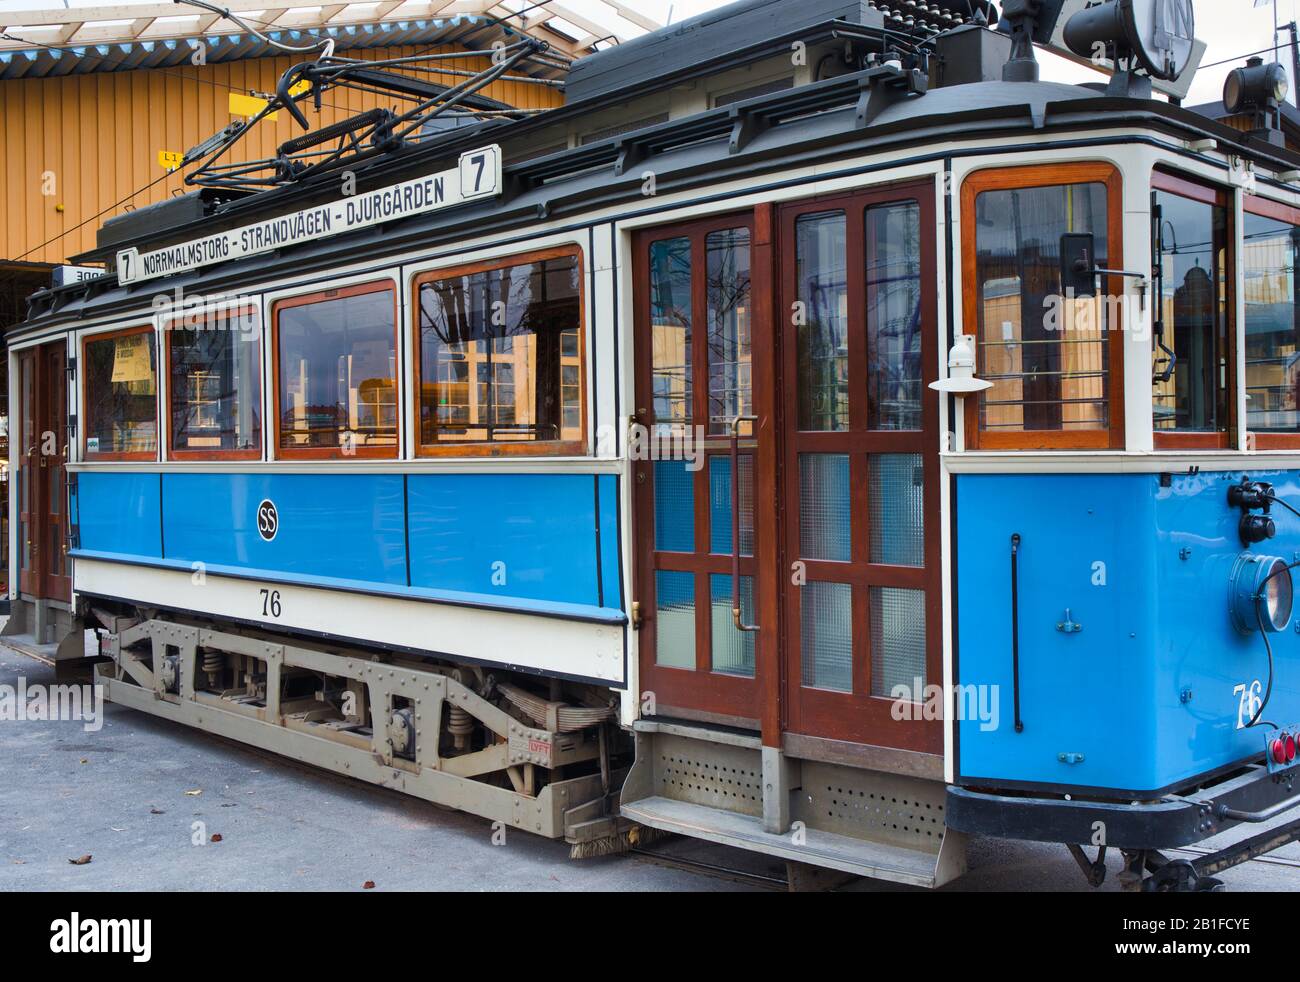 Number 7 heritage tram built in 1920 on the Djurgardslinjen, Djurgarden, Stockholm, Sweden Stock Photo